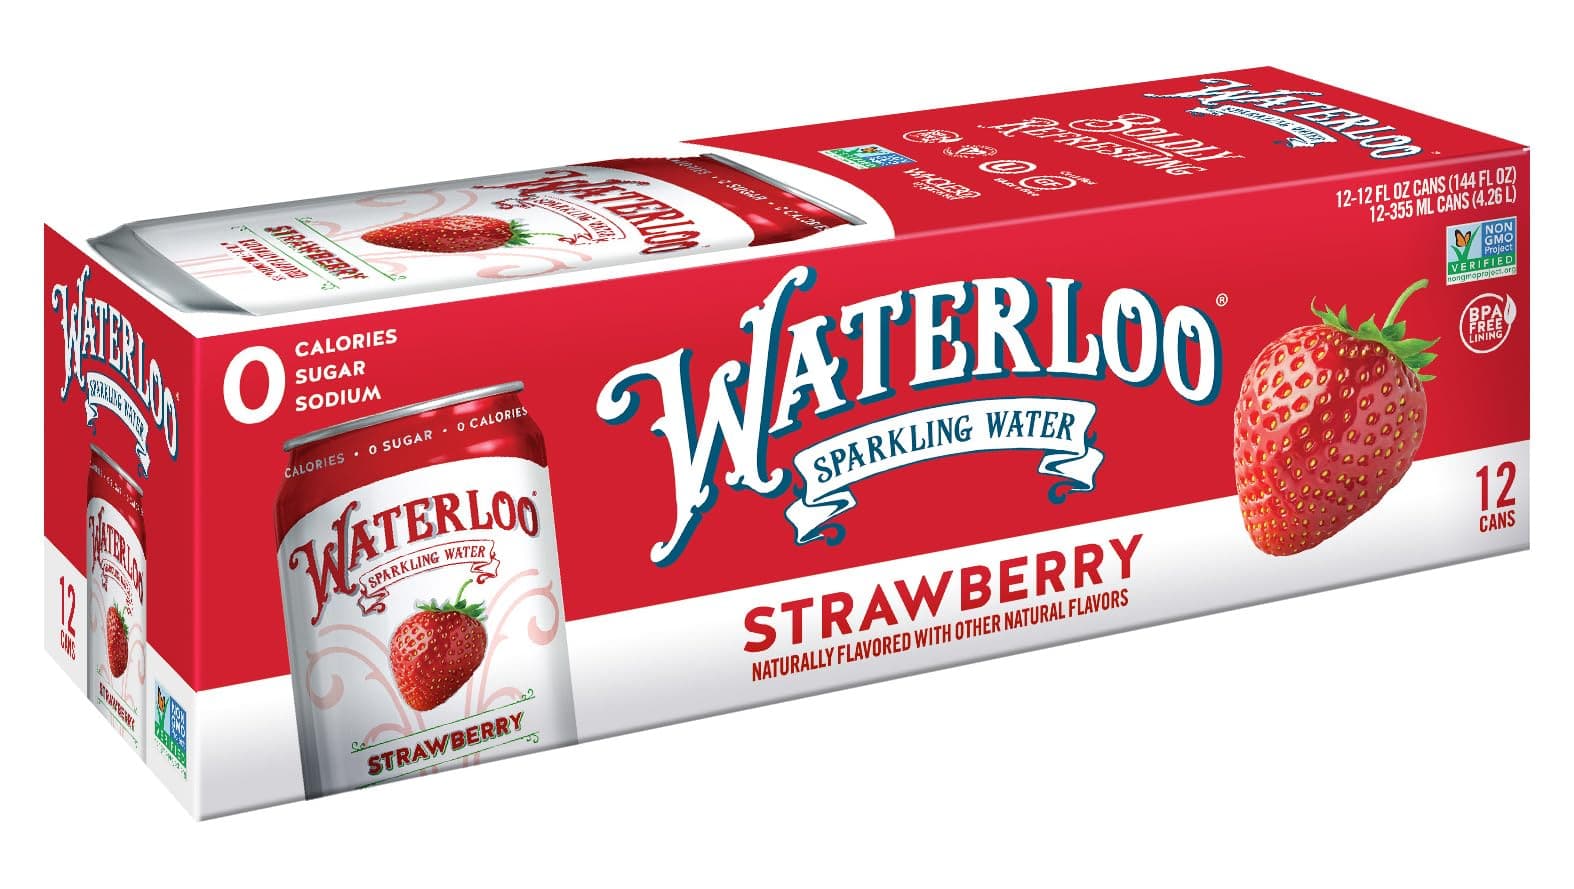 Waterloo Strawberry Sparkling Water - Organic - 12 Pack x 355ml - 0 Sugar, 0 Calories, Non-GMO, Gluten Free, BPA Free, Vegan,Whole30, Kosher, No Artificial Sweetener, Soda & Tonic Replacement - Athletix.ae